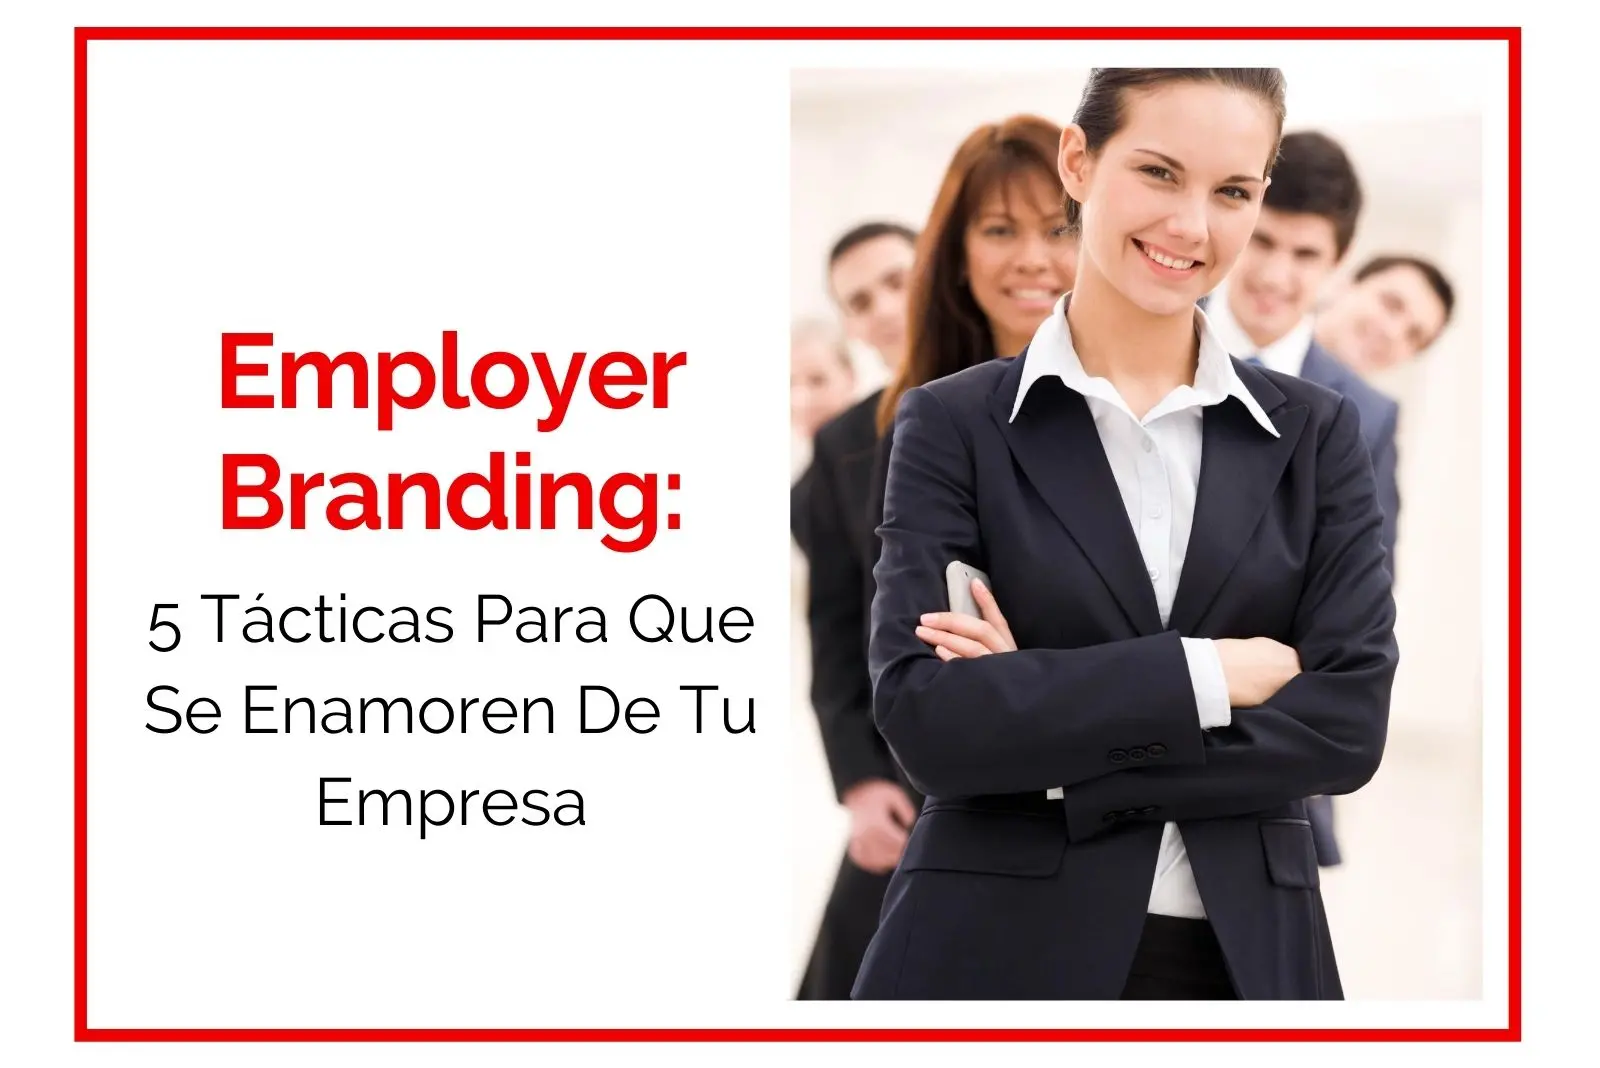 Hector-Jimenez-Employer-Branding-5-Tácticas-Para-Que-Se-Enamoren-De-Tu-Empresa-1